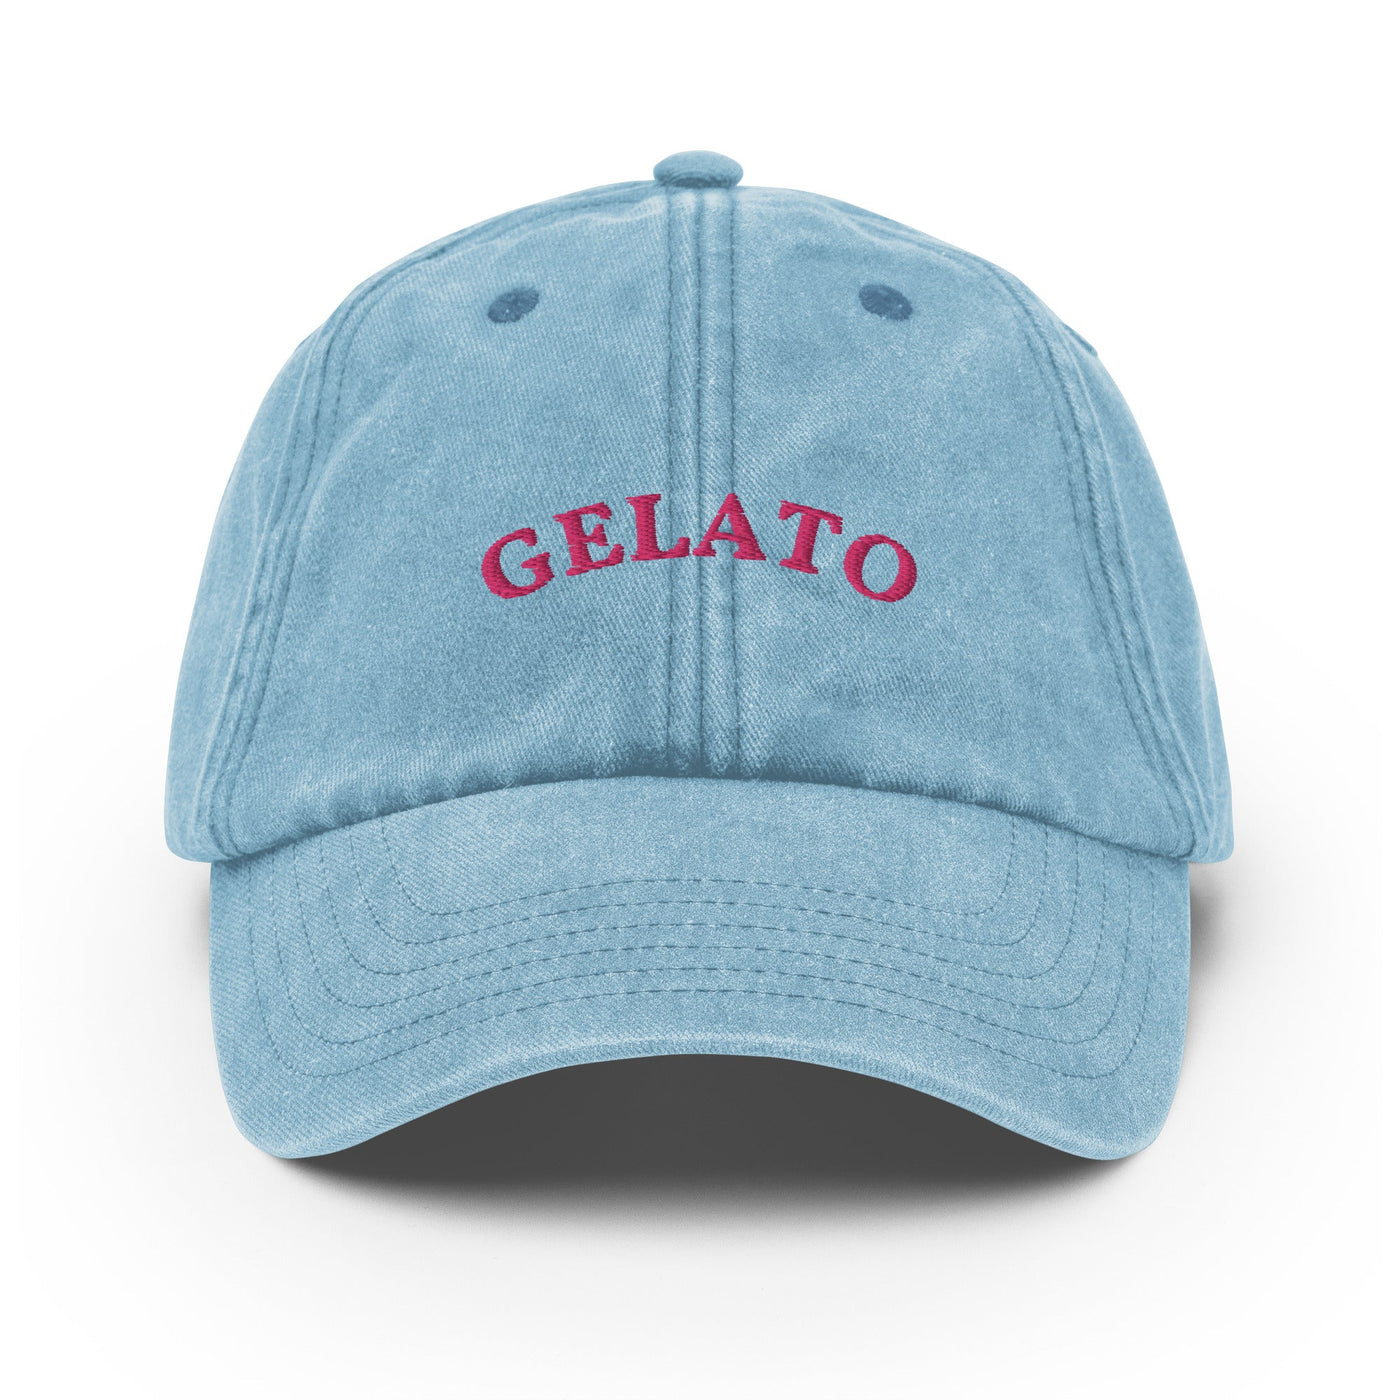 Gelato - Embroidered Vintage Cap